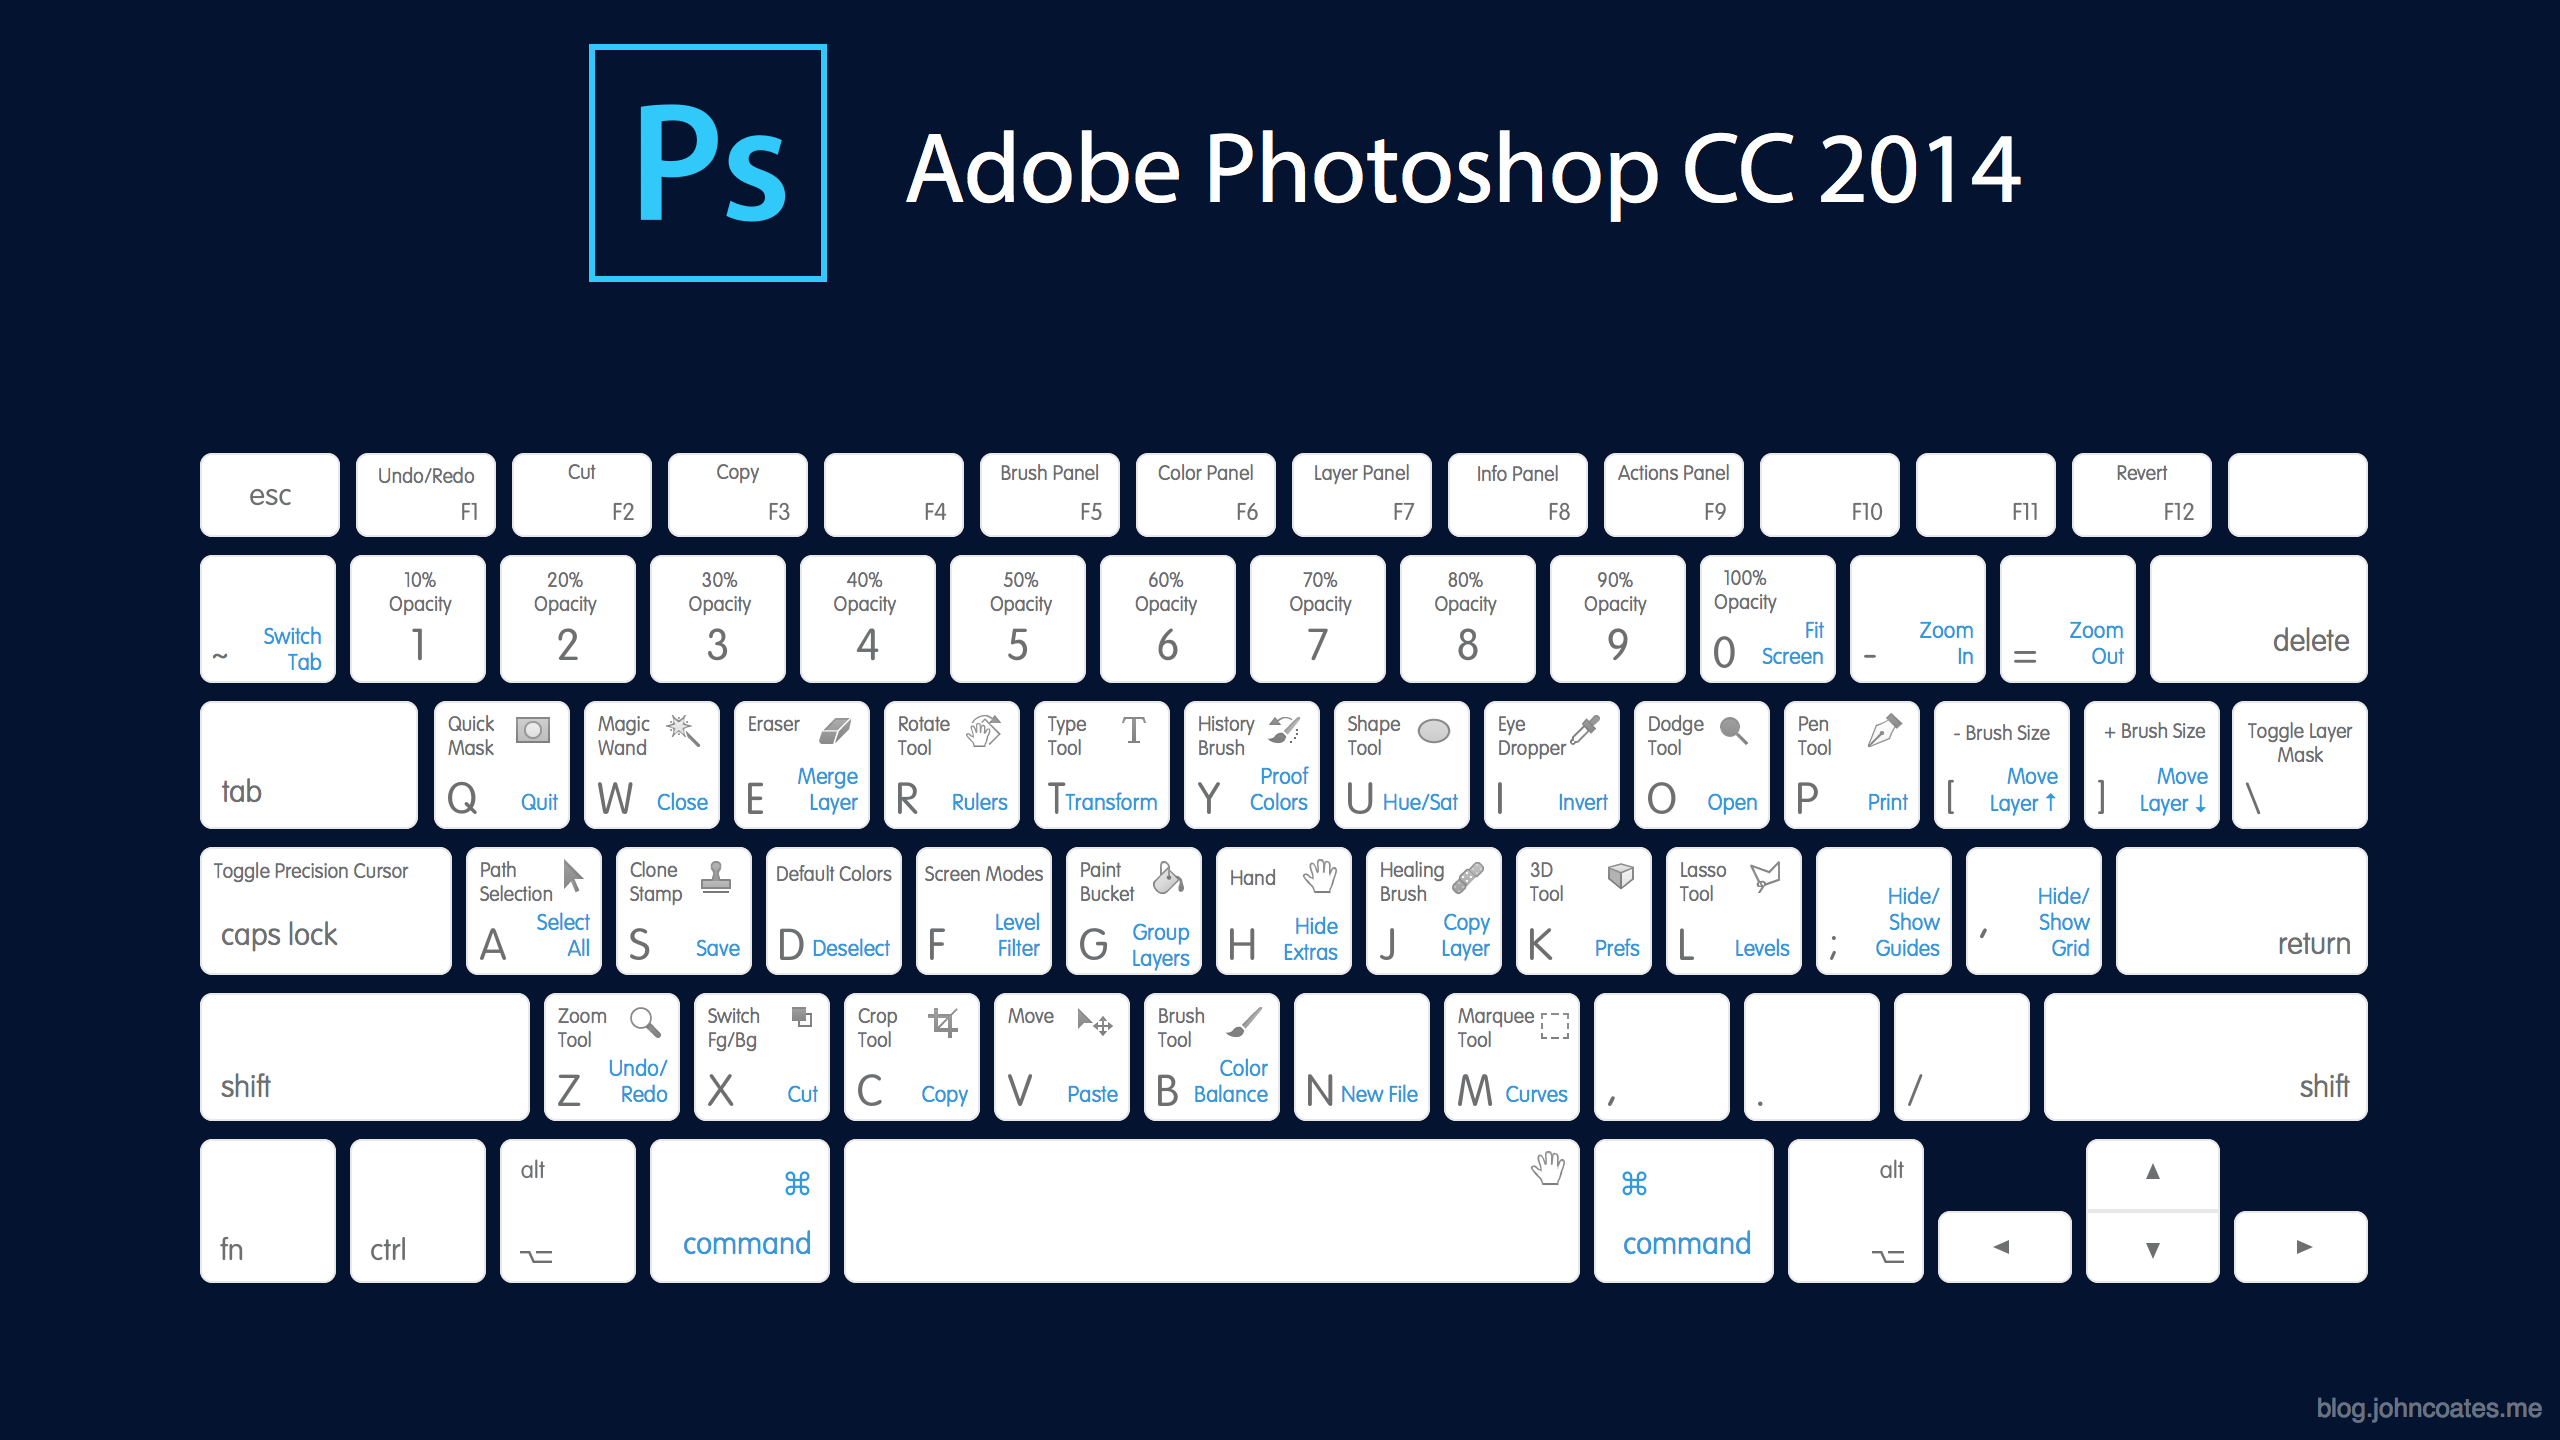 Adobe-Photoshop-CC-2014-Cheat-Sheet-Mac